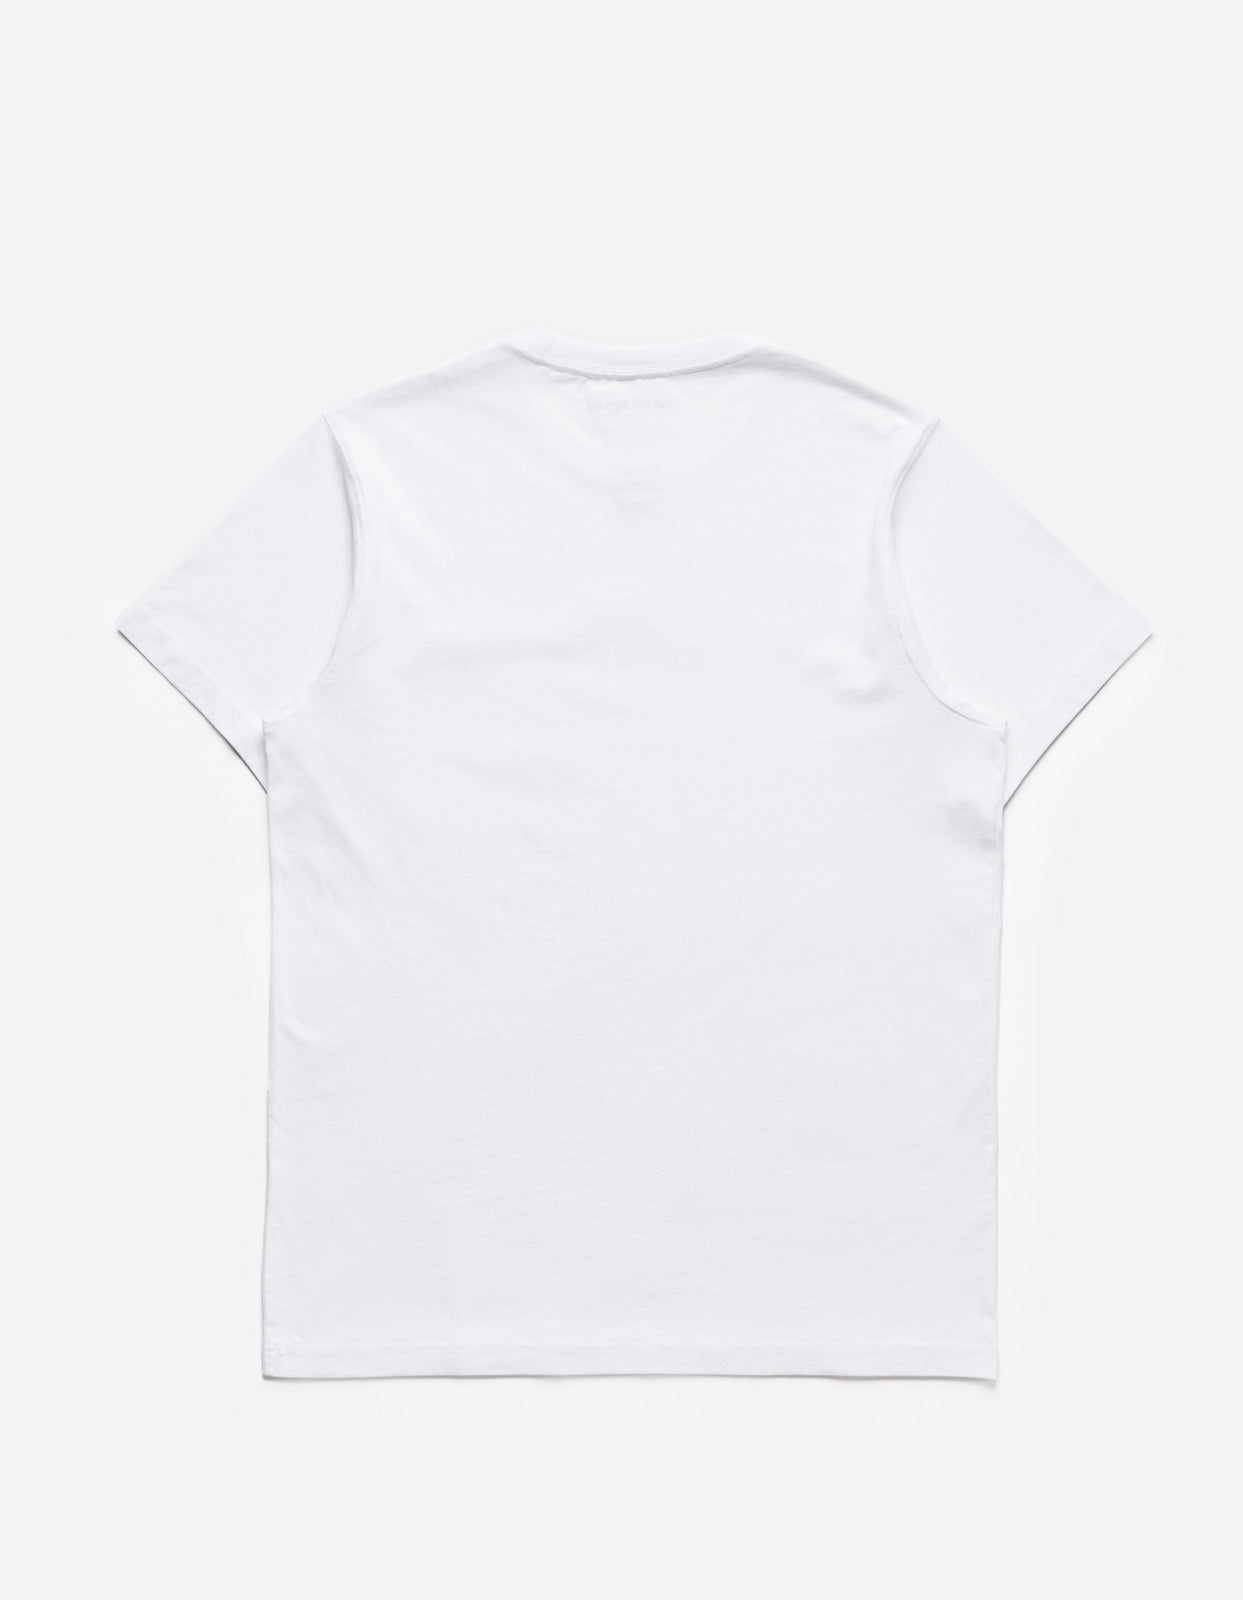 Maharishi | Invisible Warrior T-Shirt White